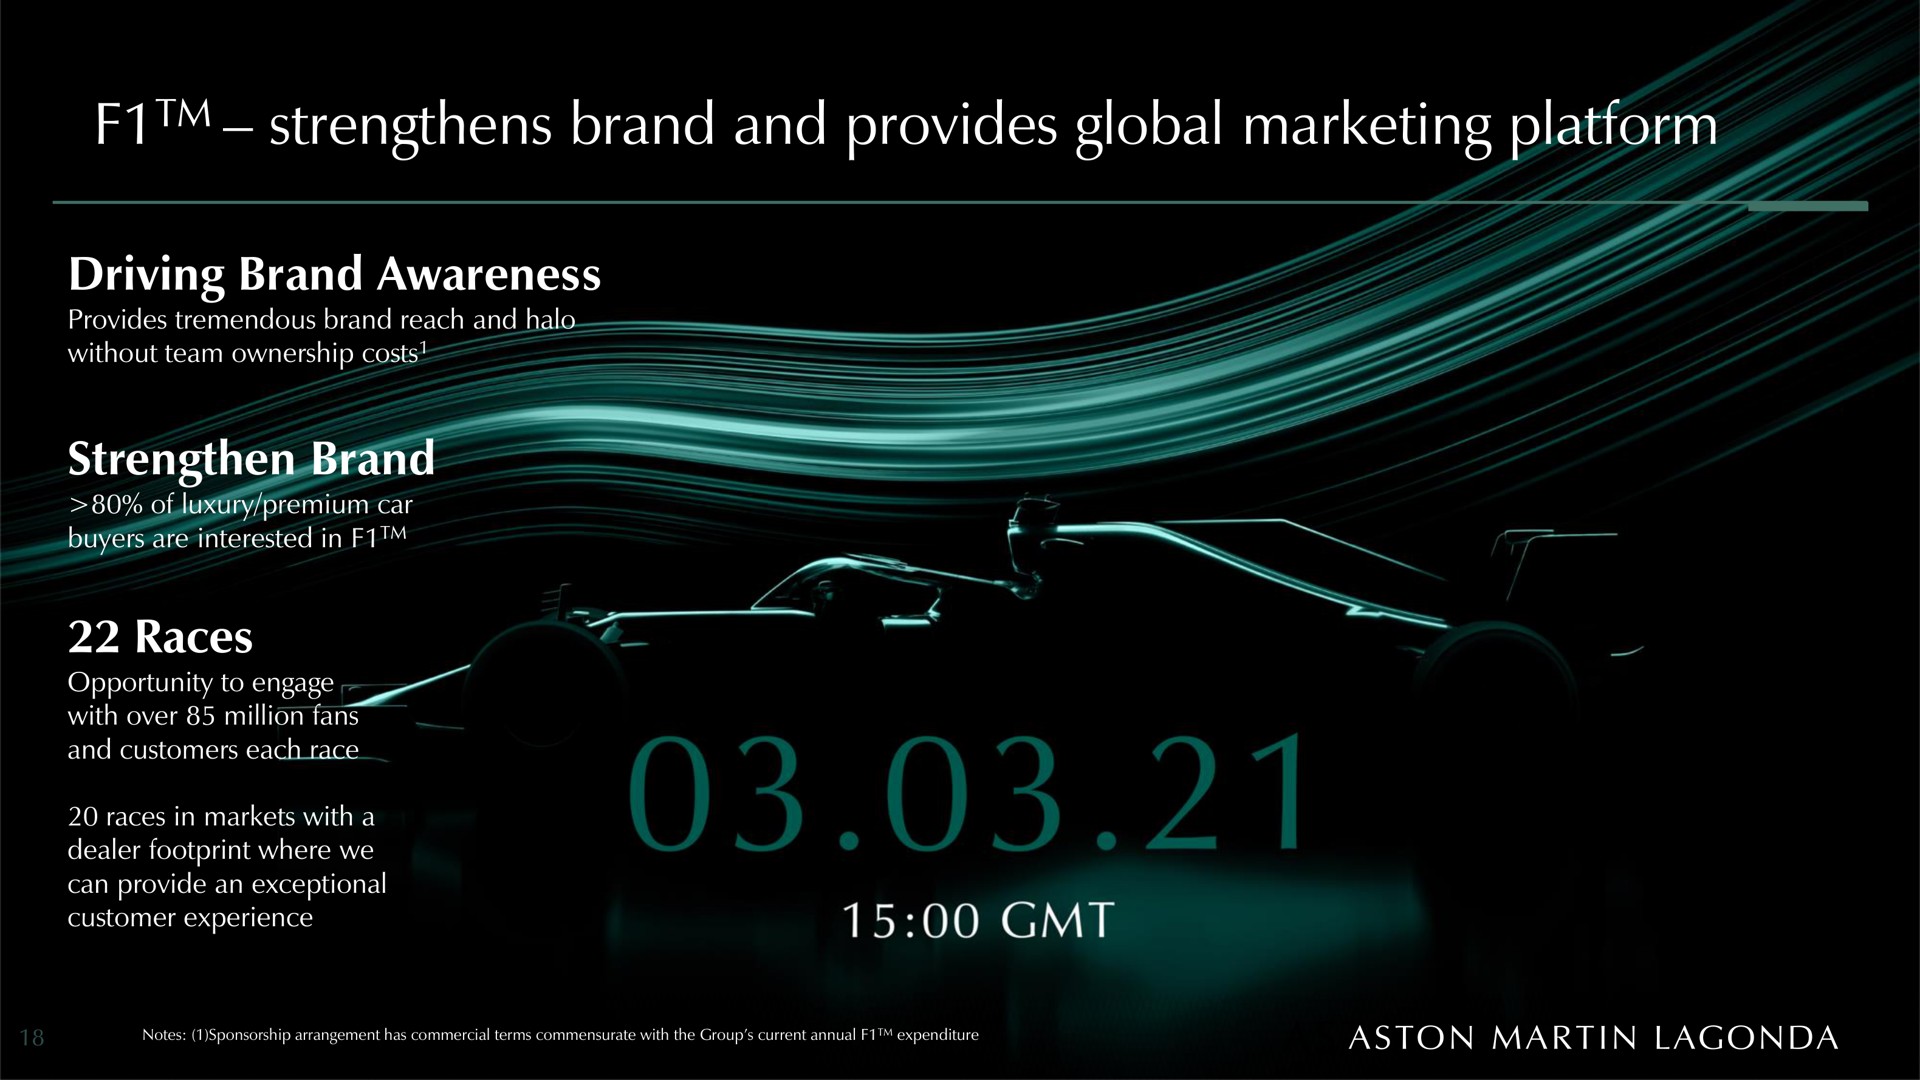 strengthens brand and provides global marketing platform | Aston Martin Lagonda